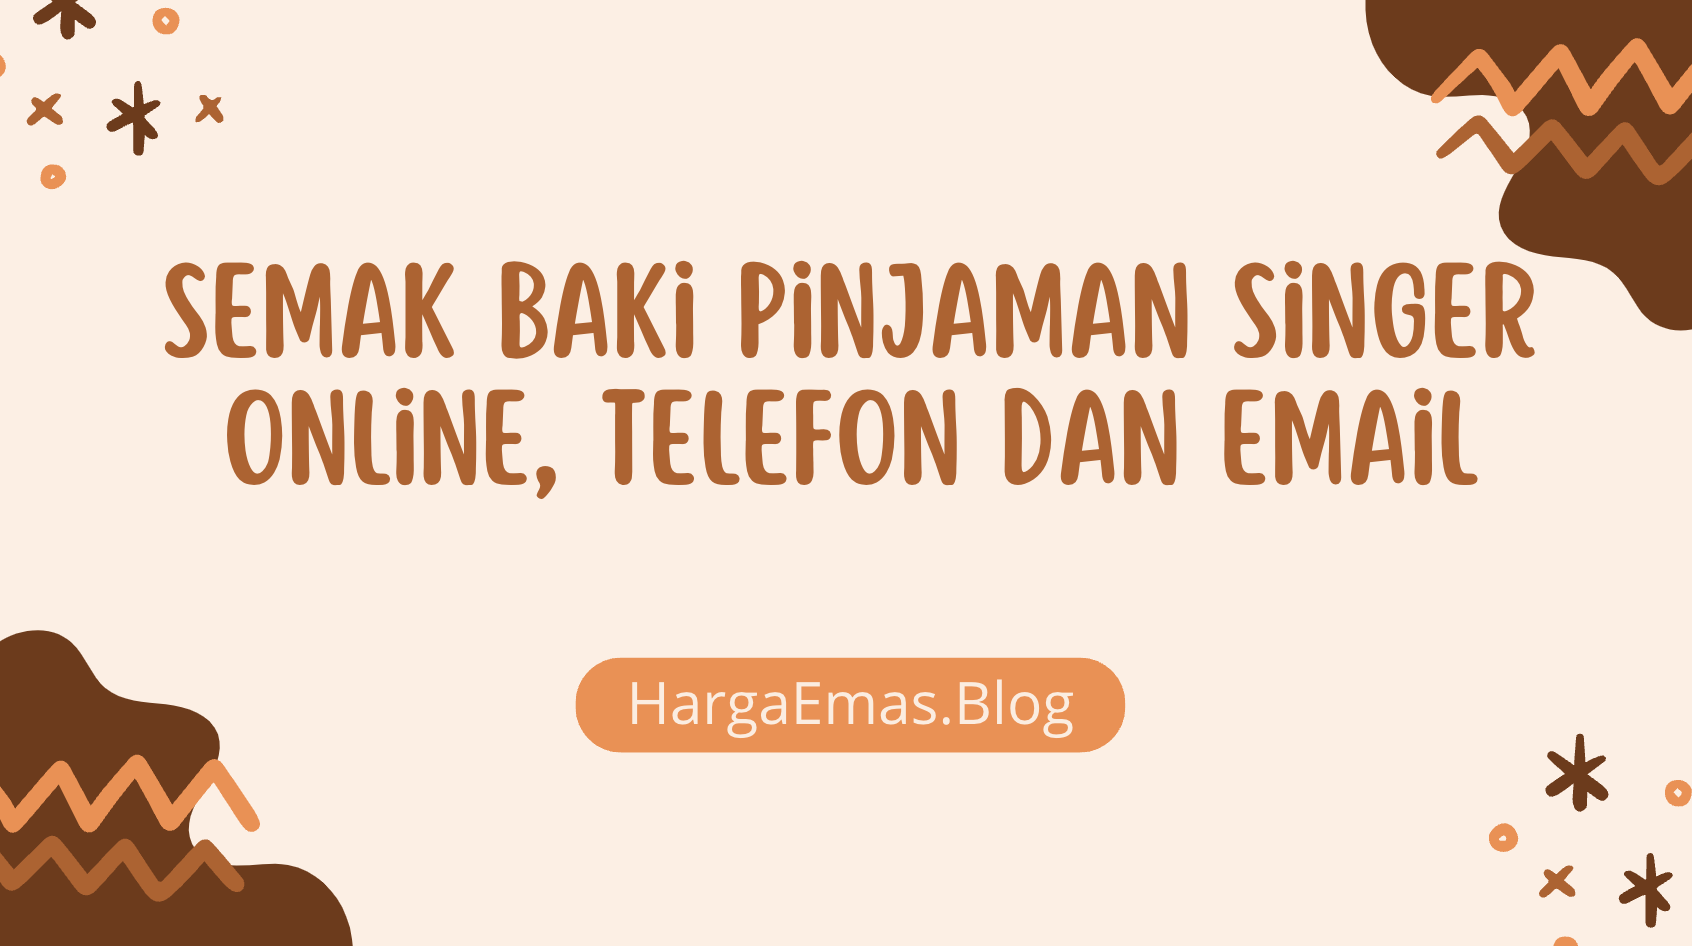 Semak Baki Pinjaman Singer Online